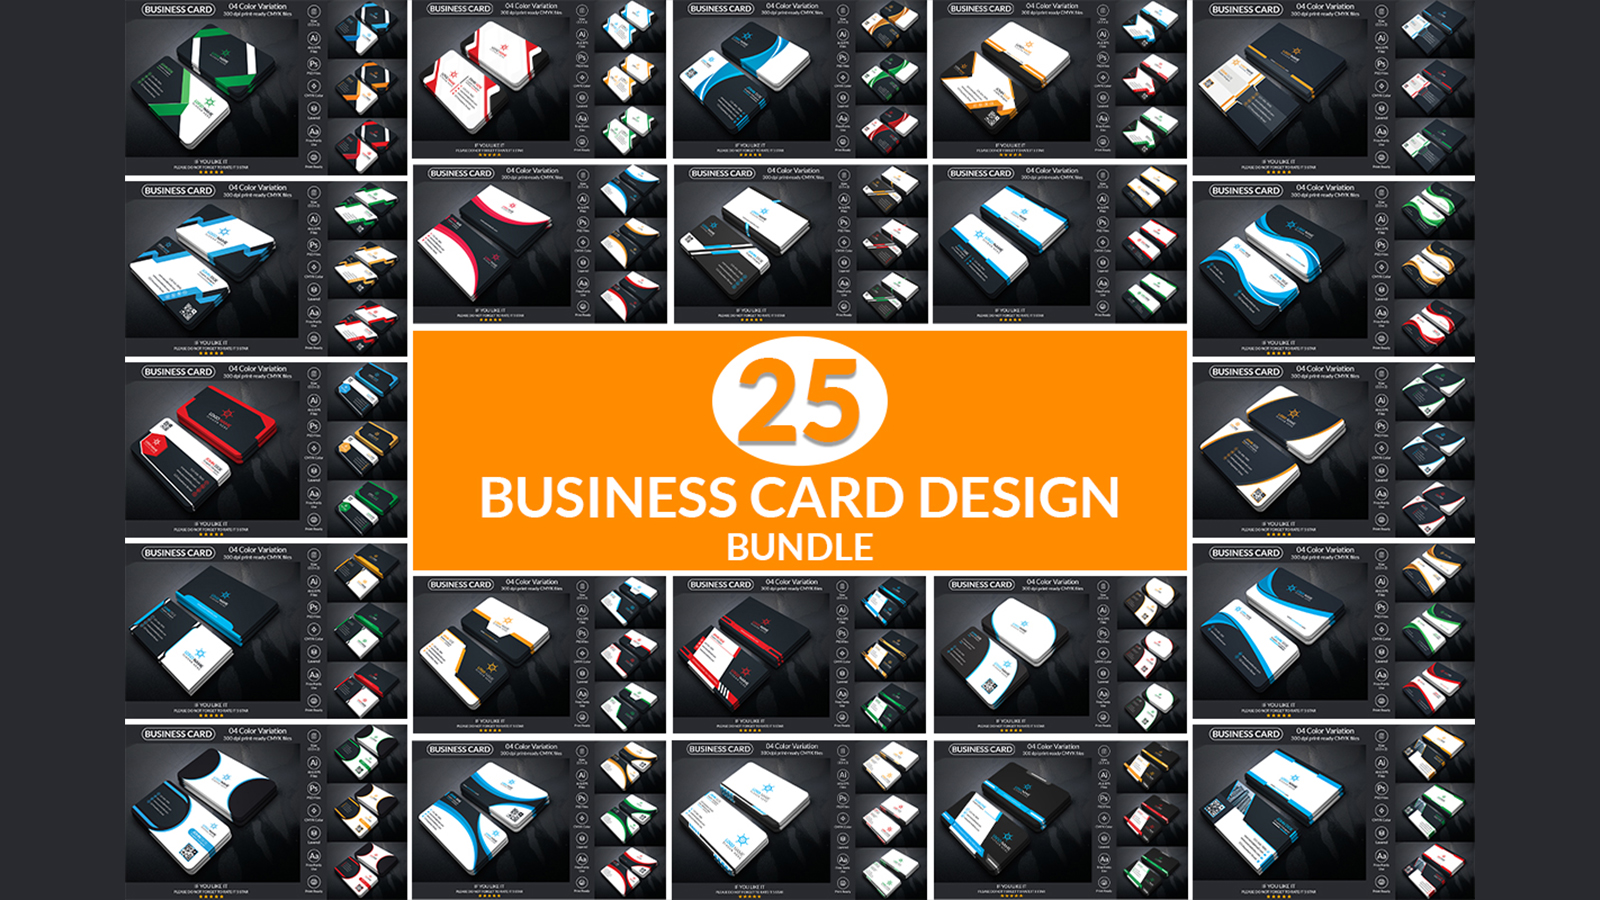 Business Card Design Template Bundle, 25 Business Card Template